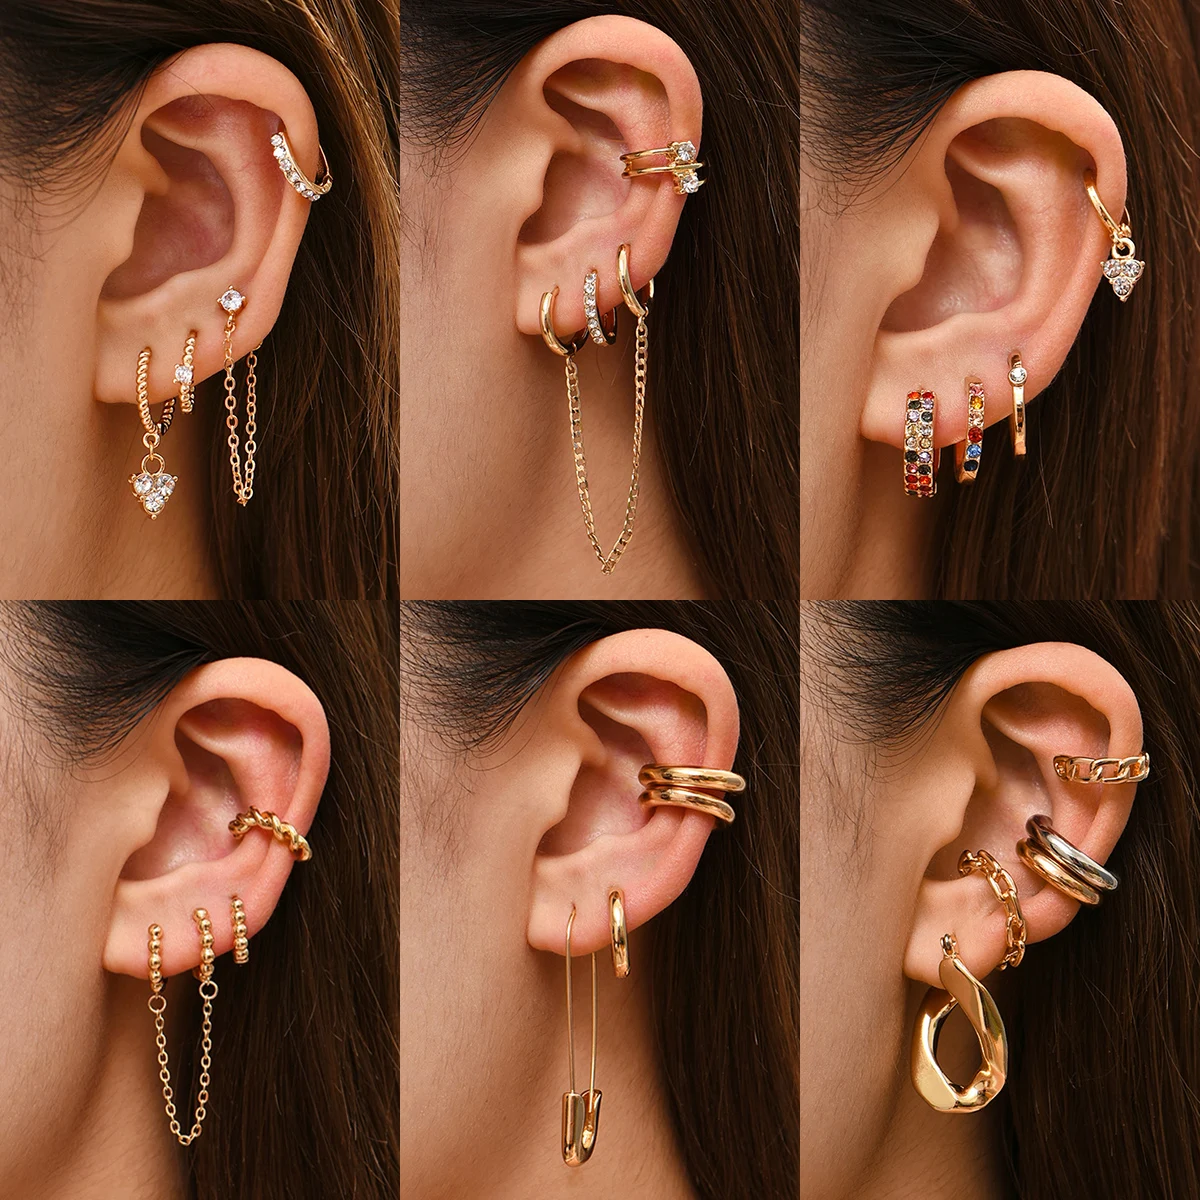 Punk Rock Helix Fake Cartilage Ear Cuff with Long Chain Circle Hoop Earrings Set for Women Tiny Piercing Huggie Earring Jewelry